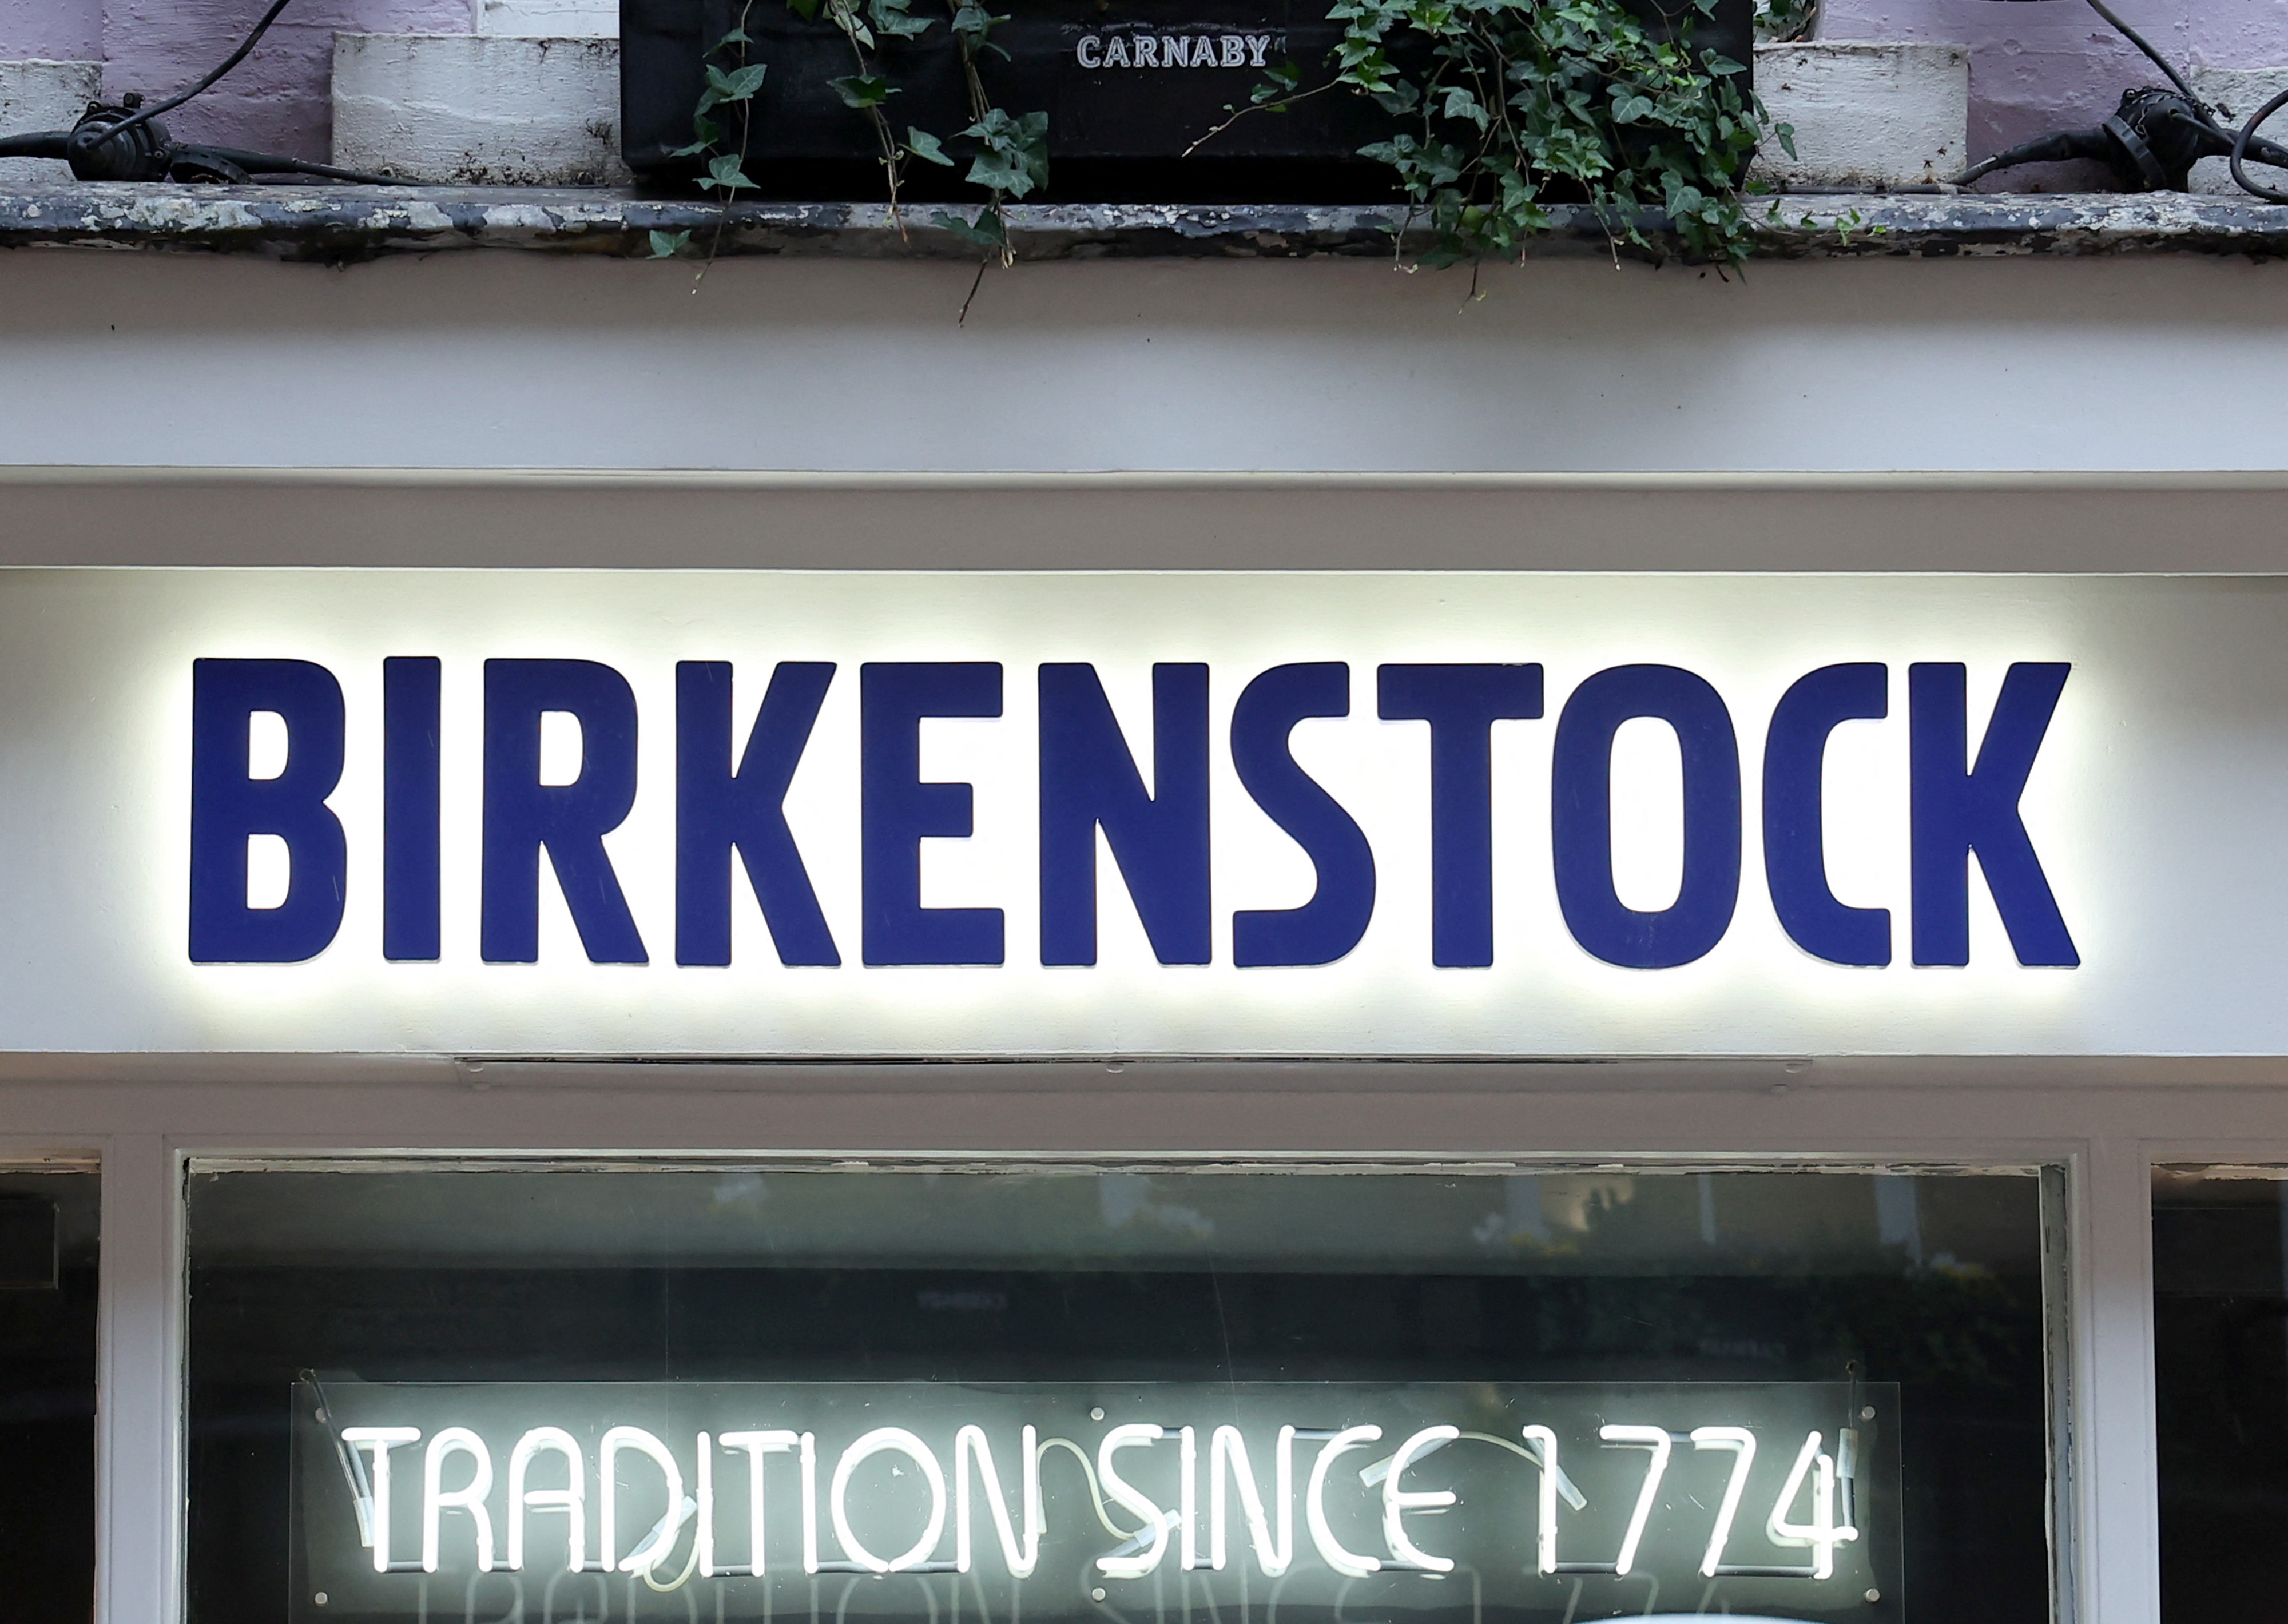 Birkenstock Owner Set for $8 Billion IPO